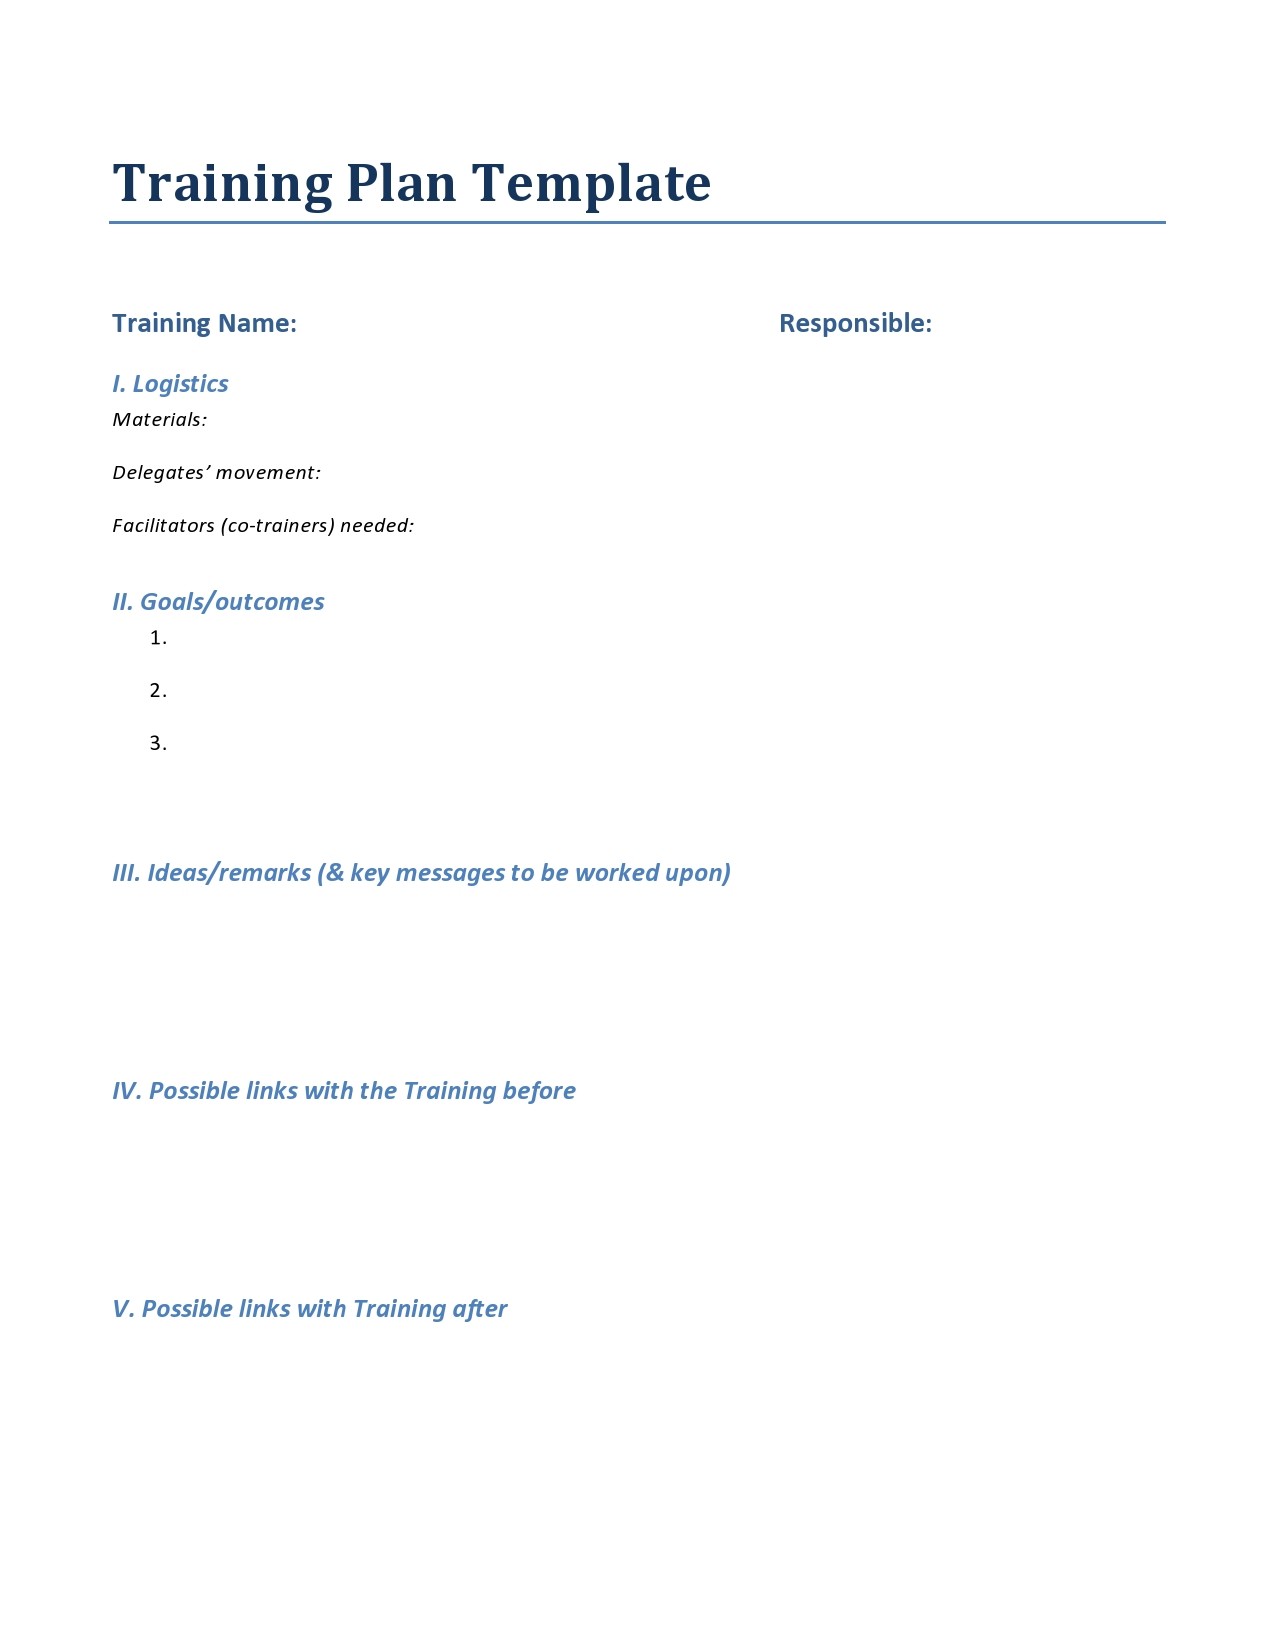 Free training plan template 12